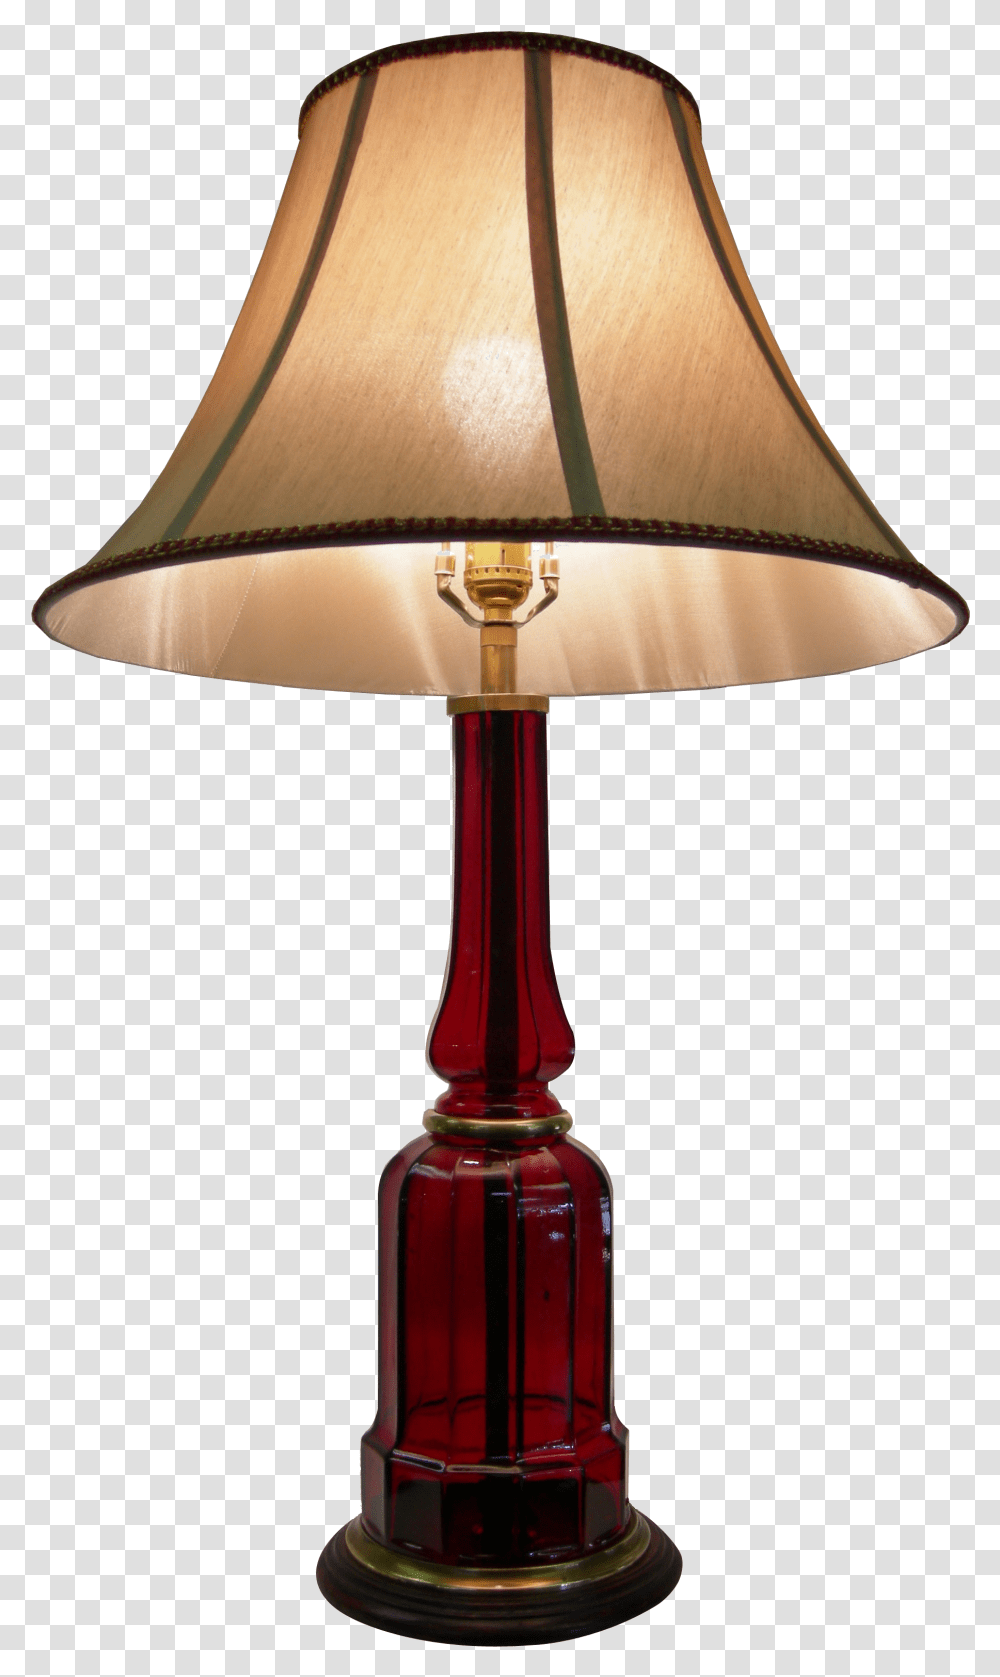 Download Lamp Image Clipart Lamp, Lampshade, Table Lamp Transparent Png